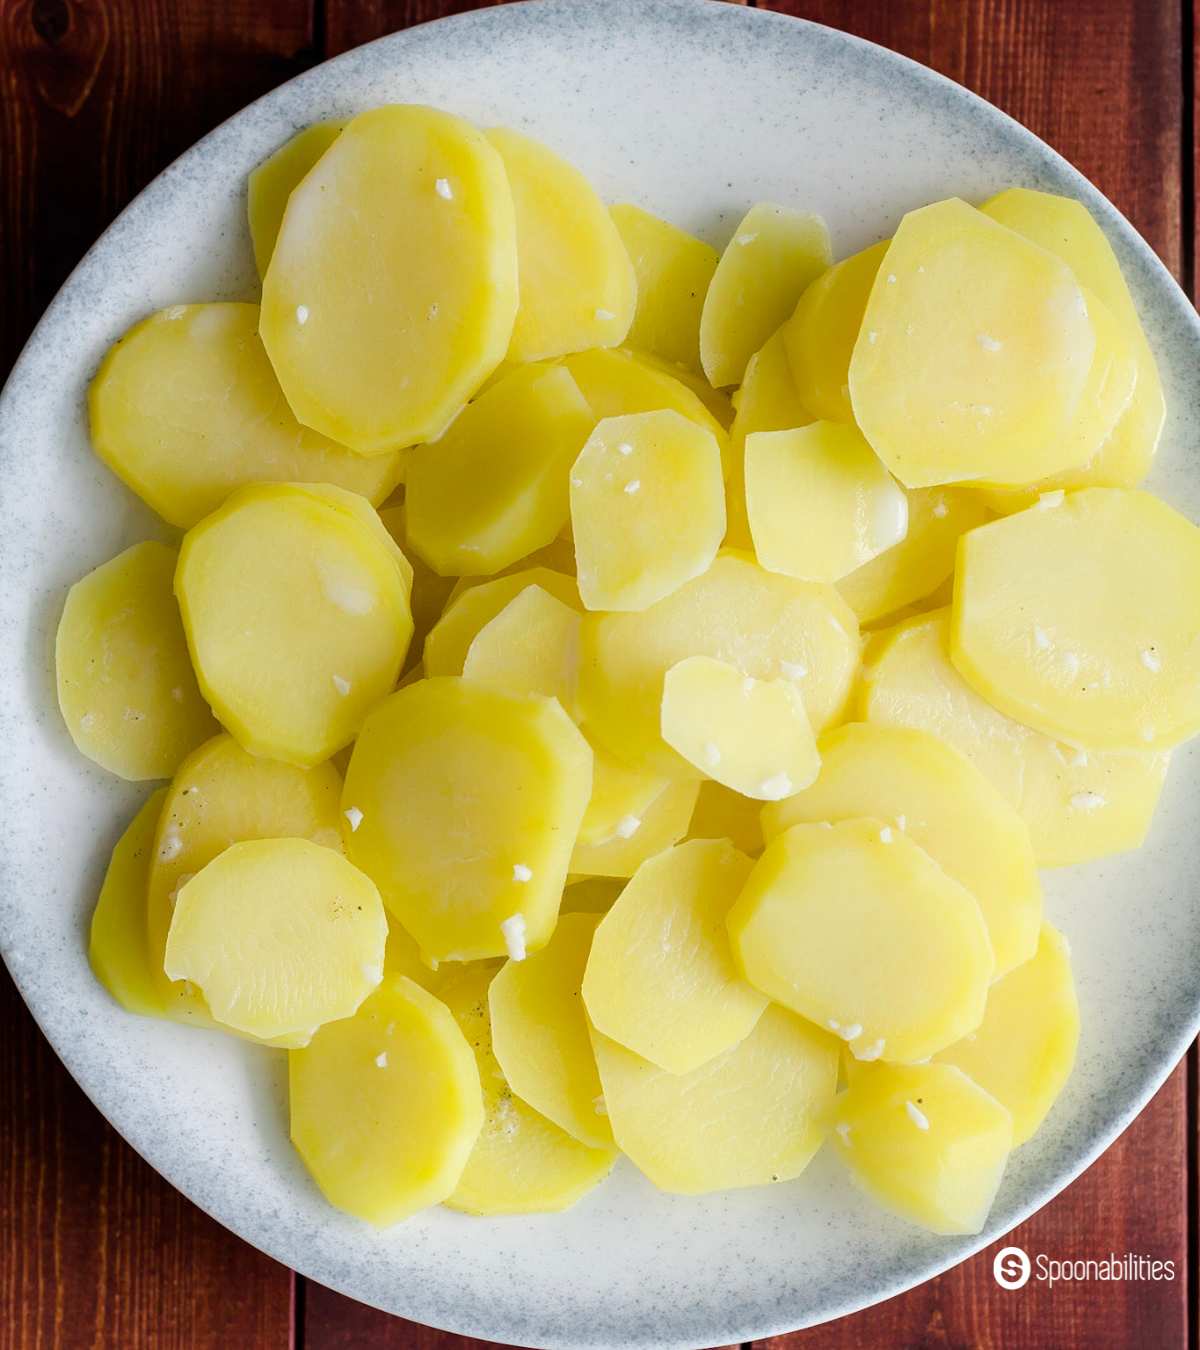 Sliced potatoes for gratin dish